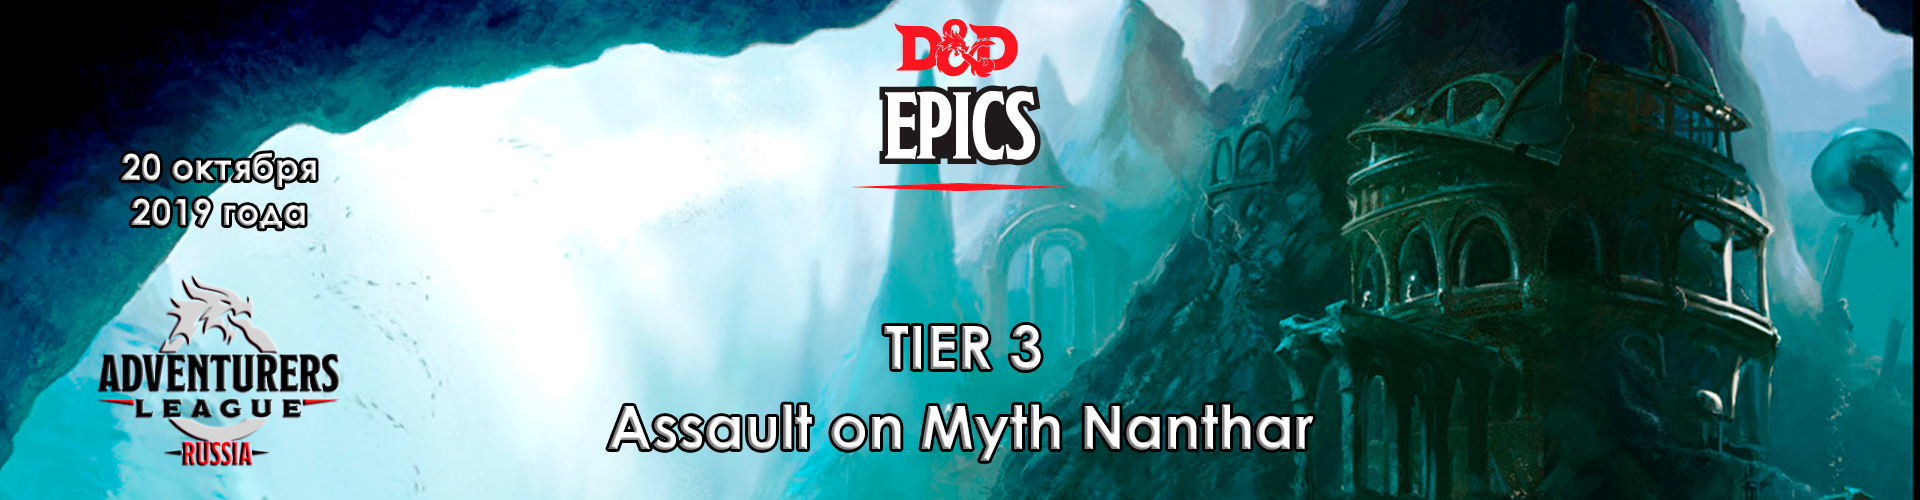 [D&D AL] Assault on Myth Nanthar - TIER 3